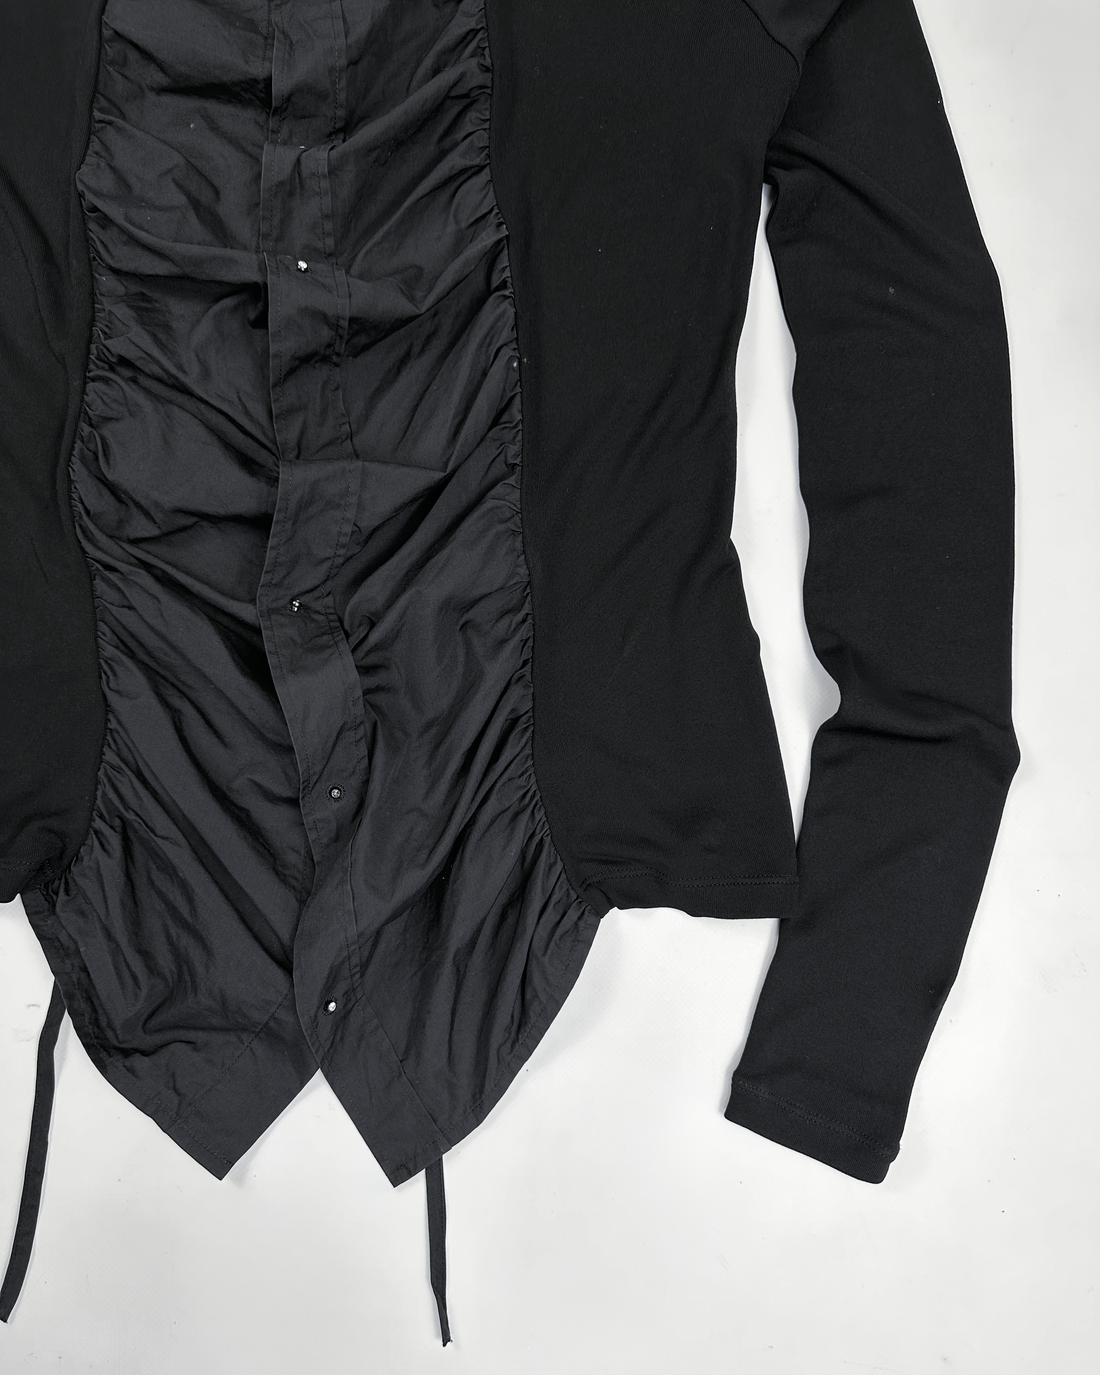 Jean Paul Gaultier 2-Texture Black Wrapped Shirt 2000's